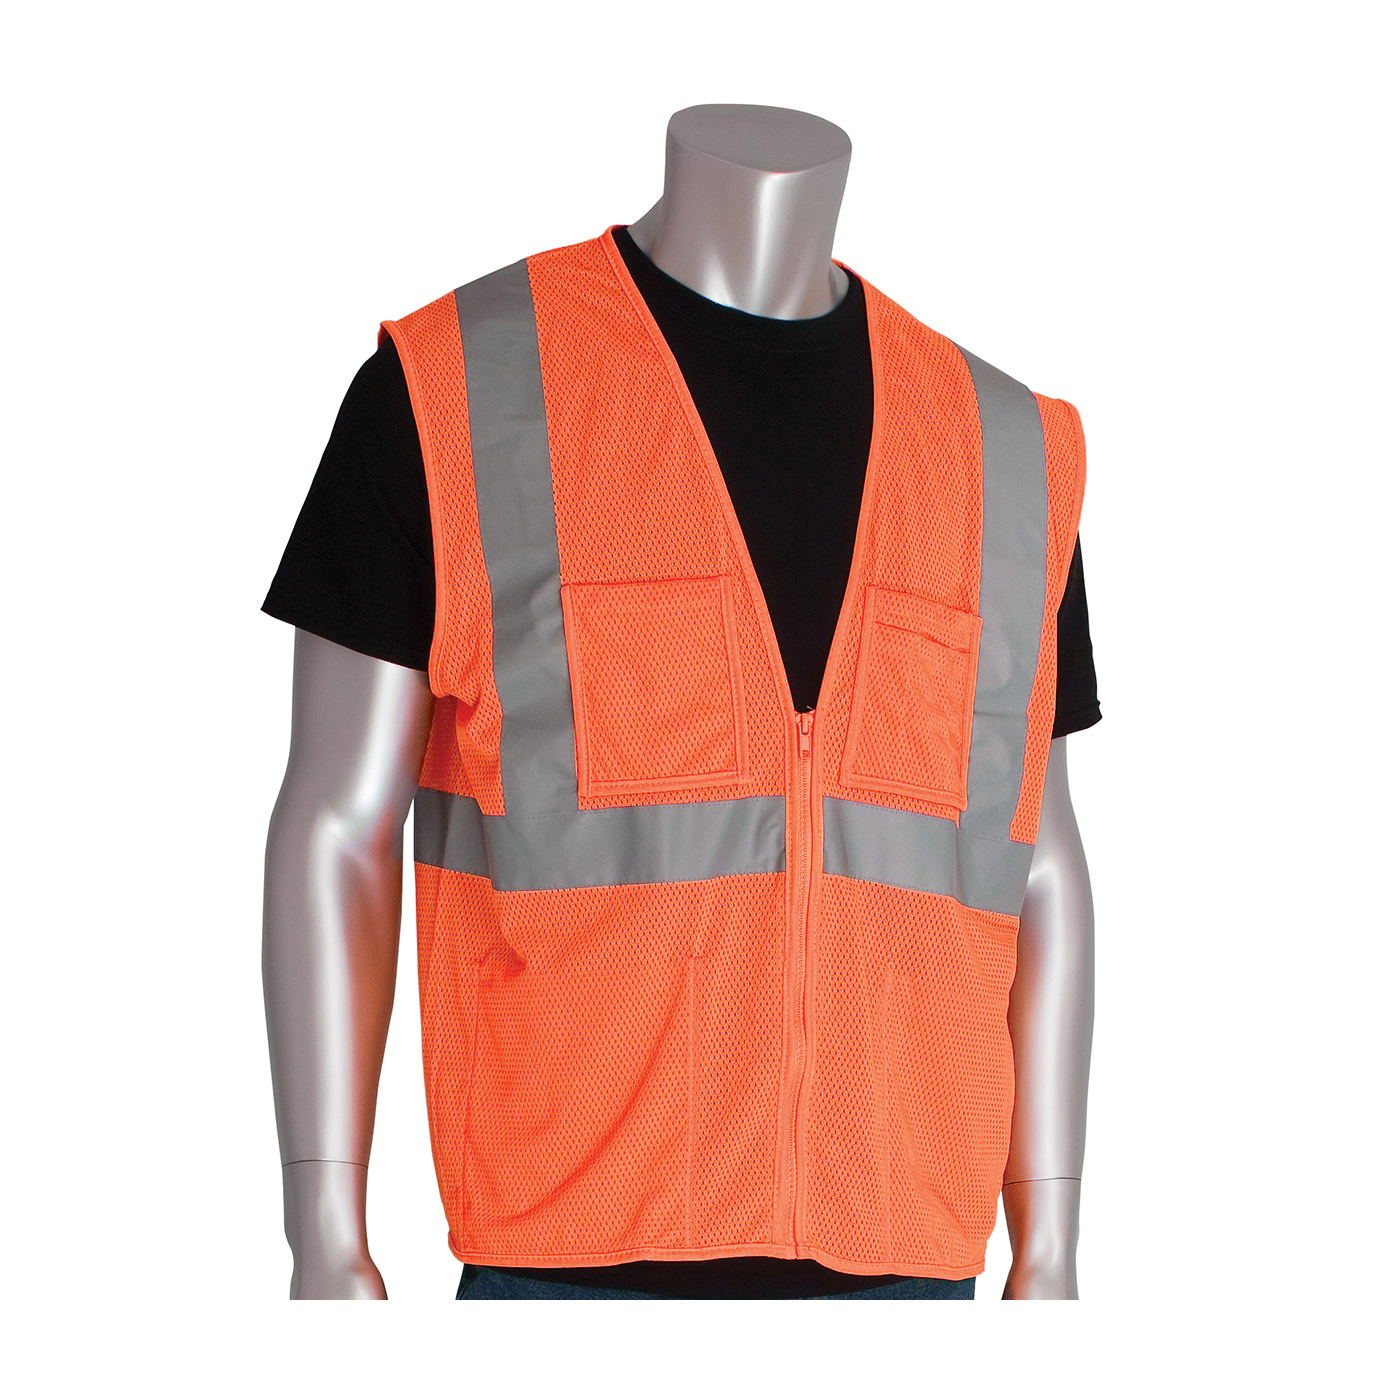 PIP® 302-MVGZ4POR-L Safety Vest, L, Hi-Viz Orange, Polyester Mesh, Zipper Closure, 4 Pockets, ANSI Class: Class 2, Specifications Met: ANSI 107 Type R